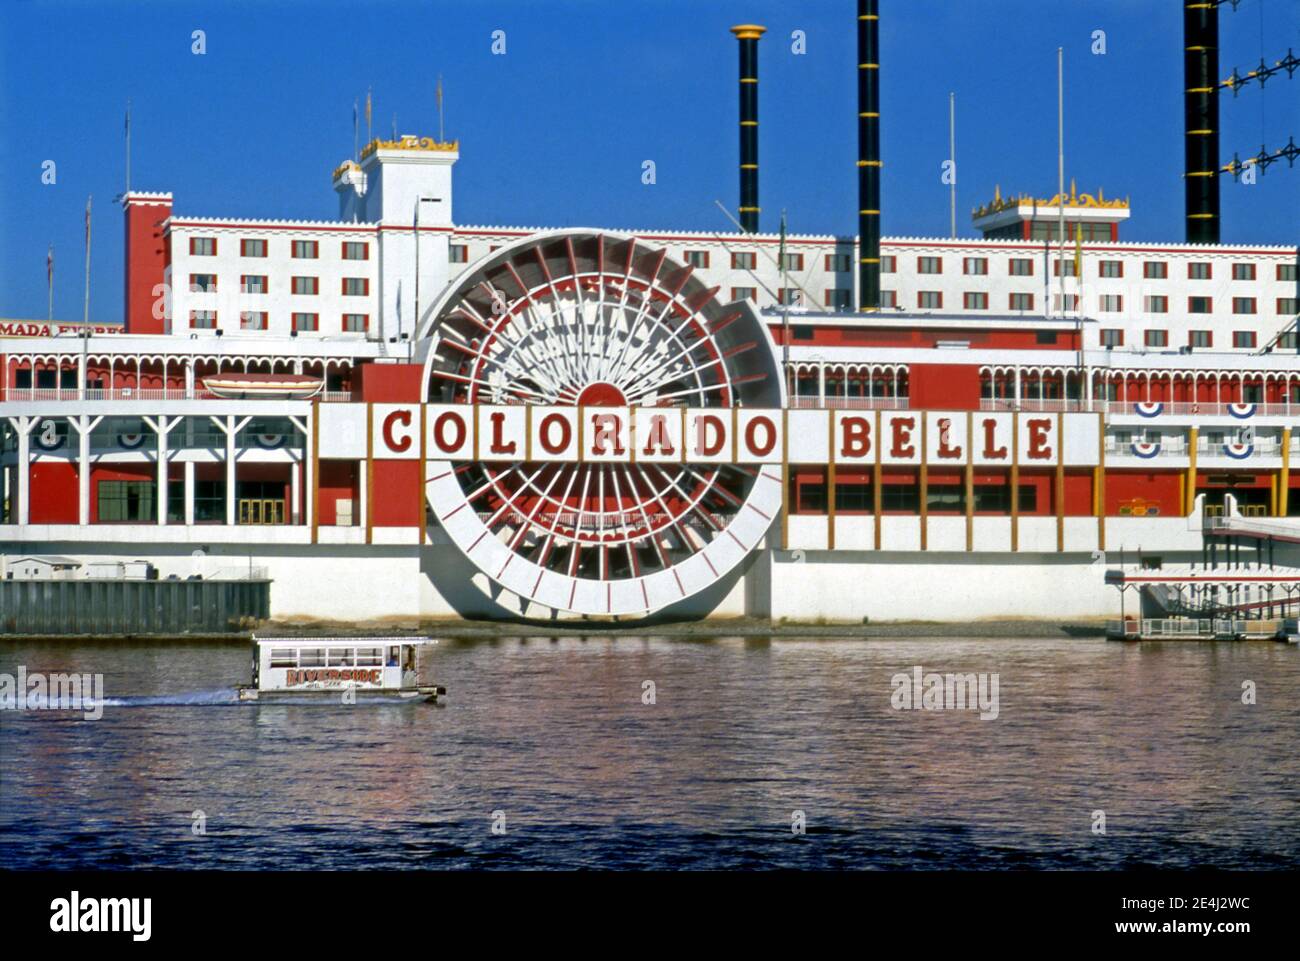 Colorado Belle Hotel und Casino in Laughlin, Nevada 